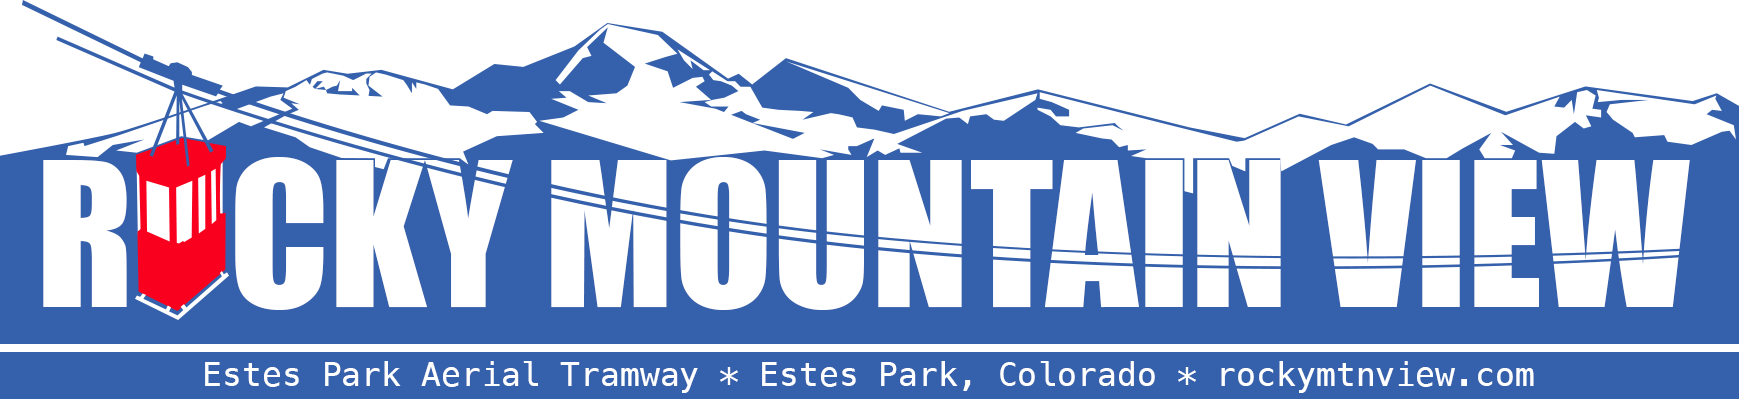 Rocky Mountain View logo